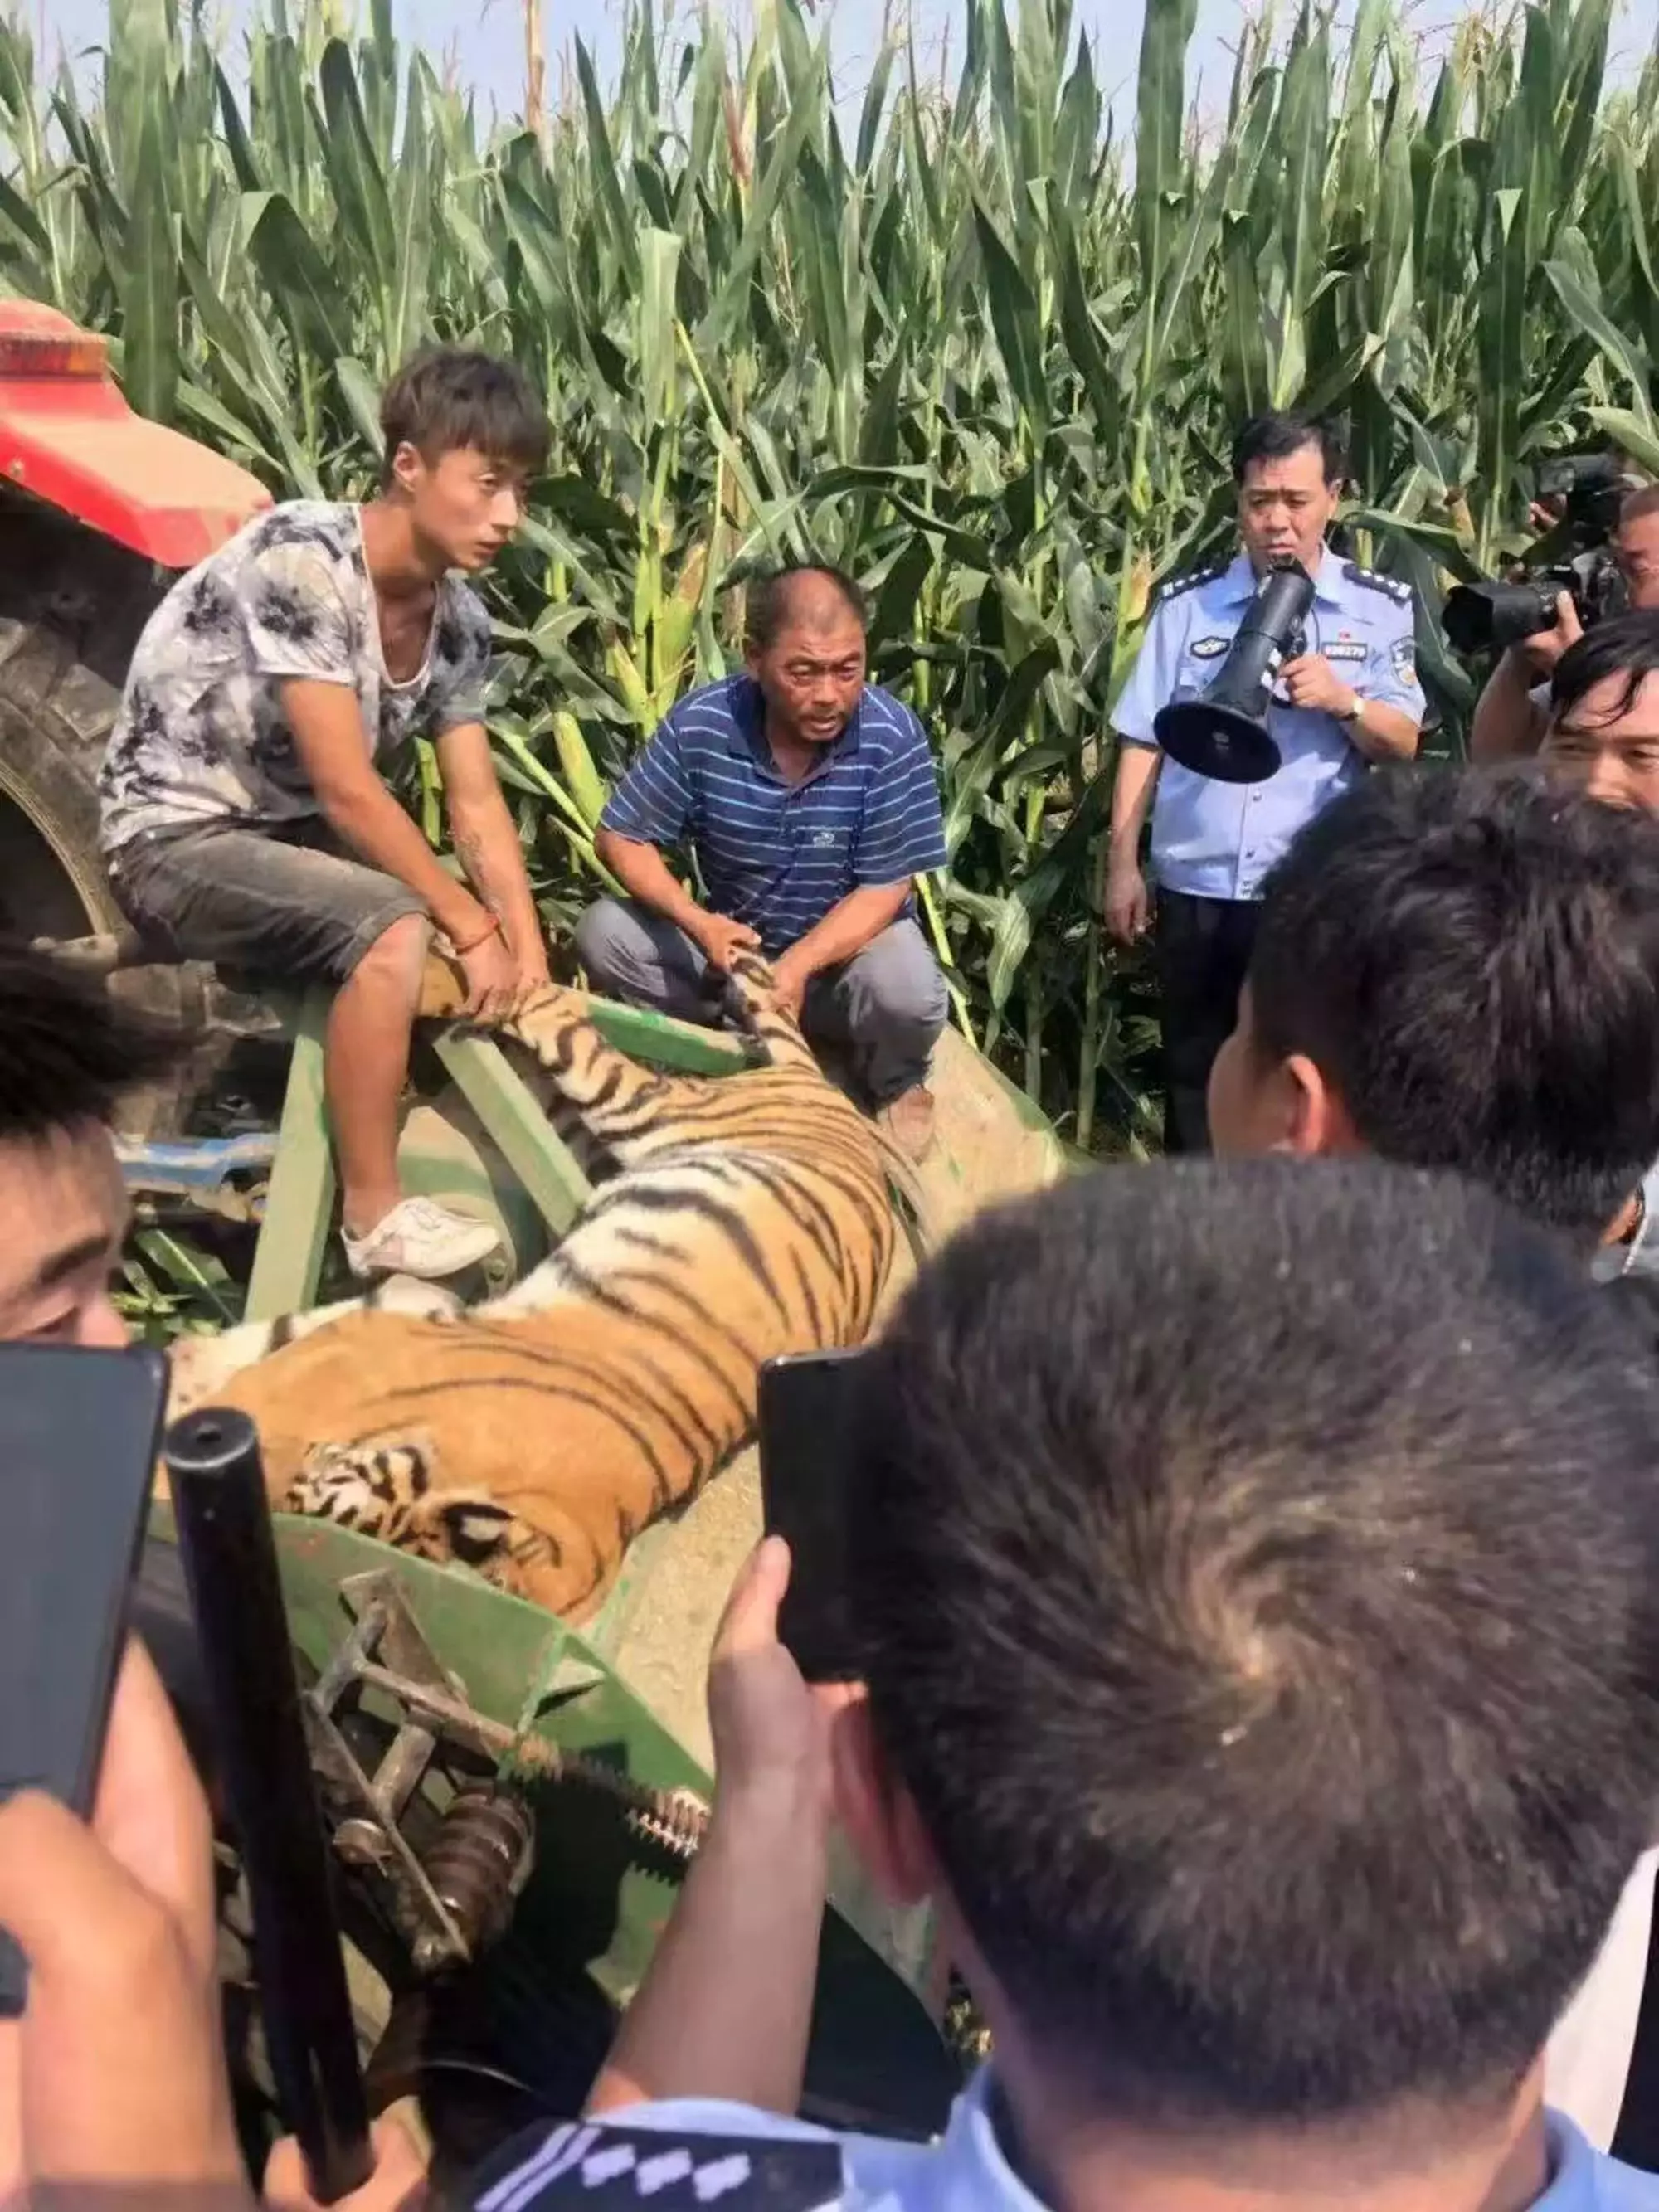 The tiger was found in a cornfield.